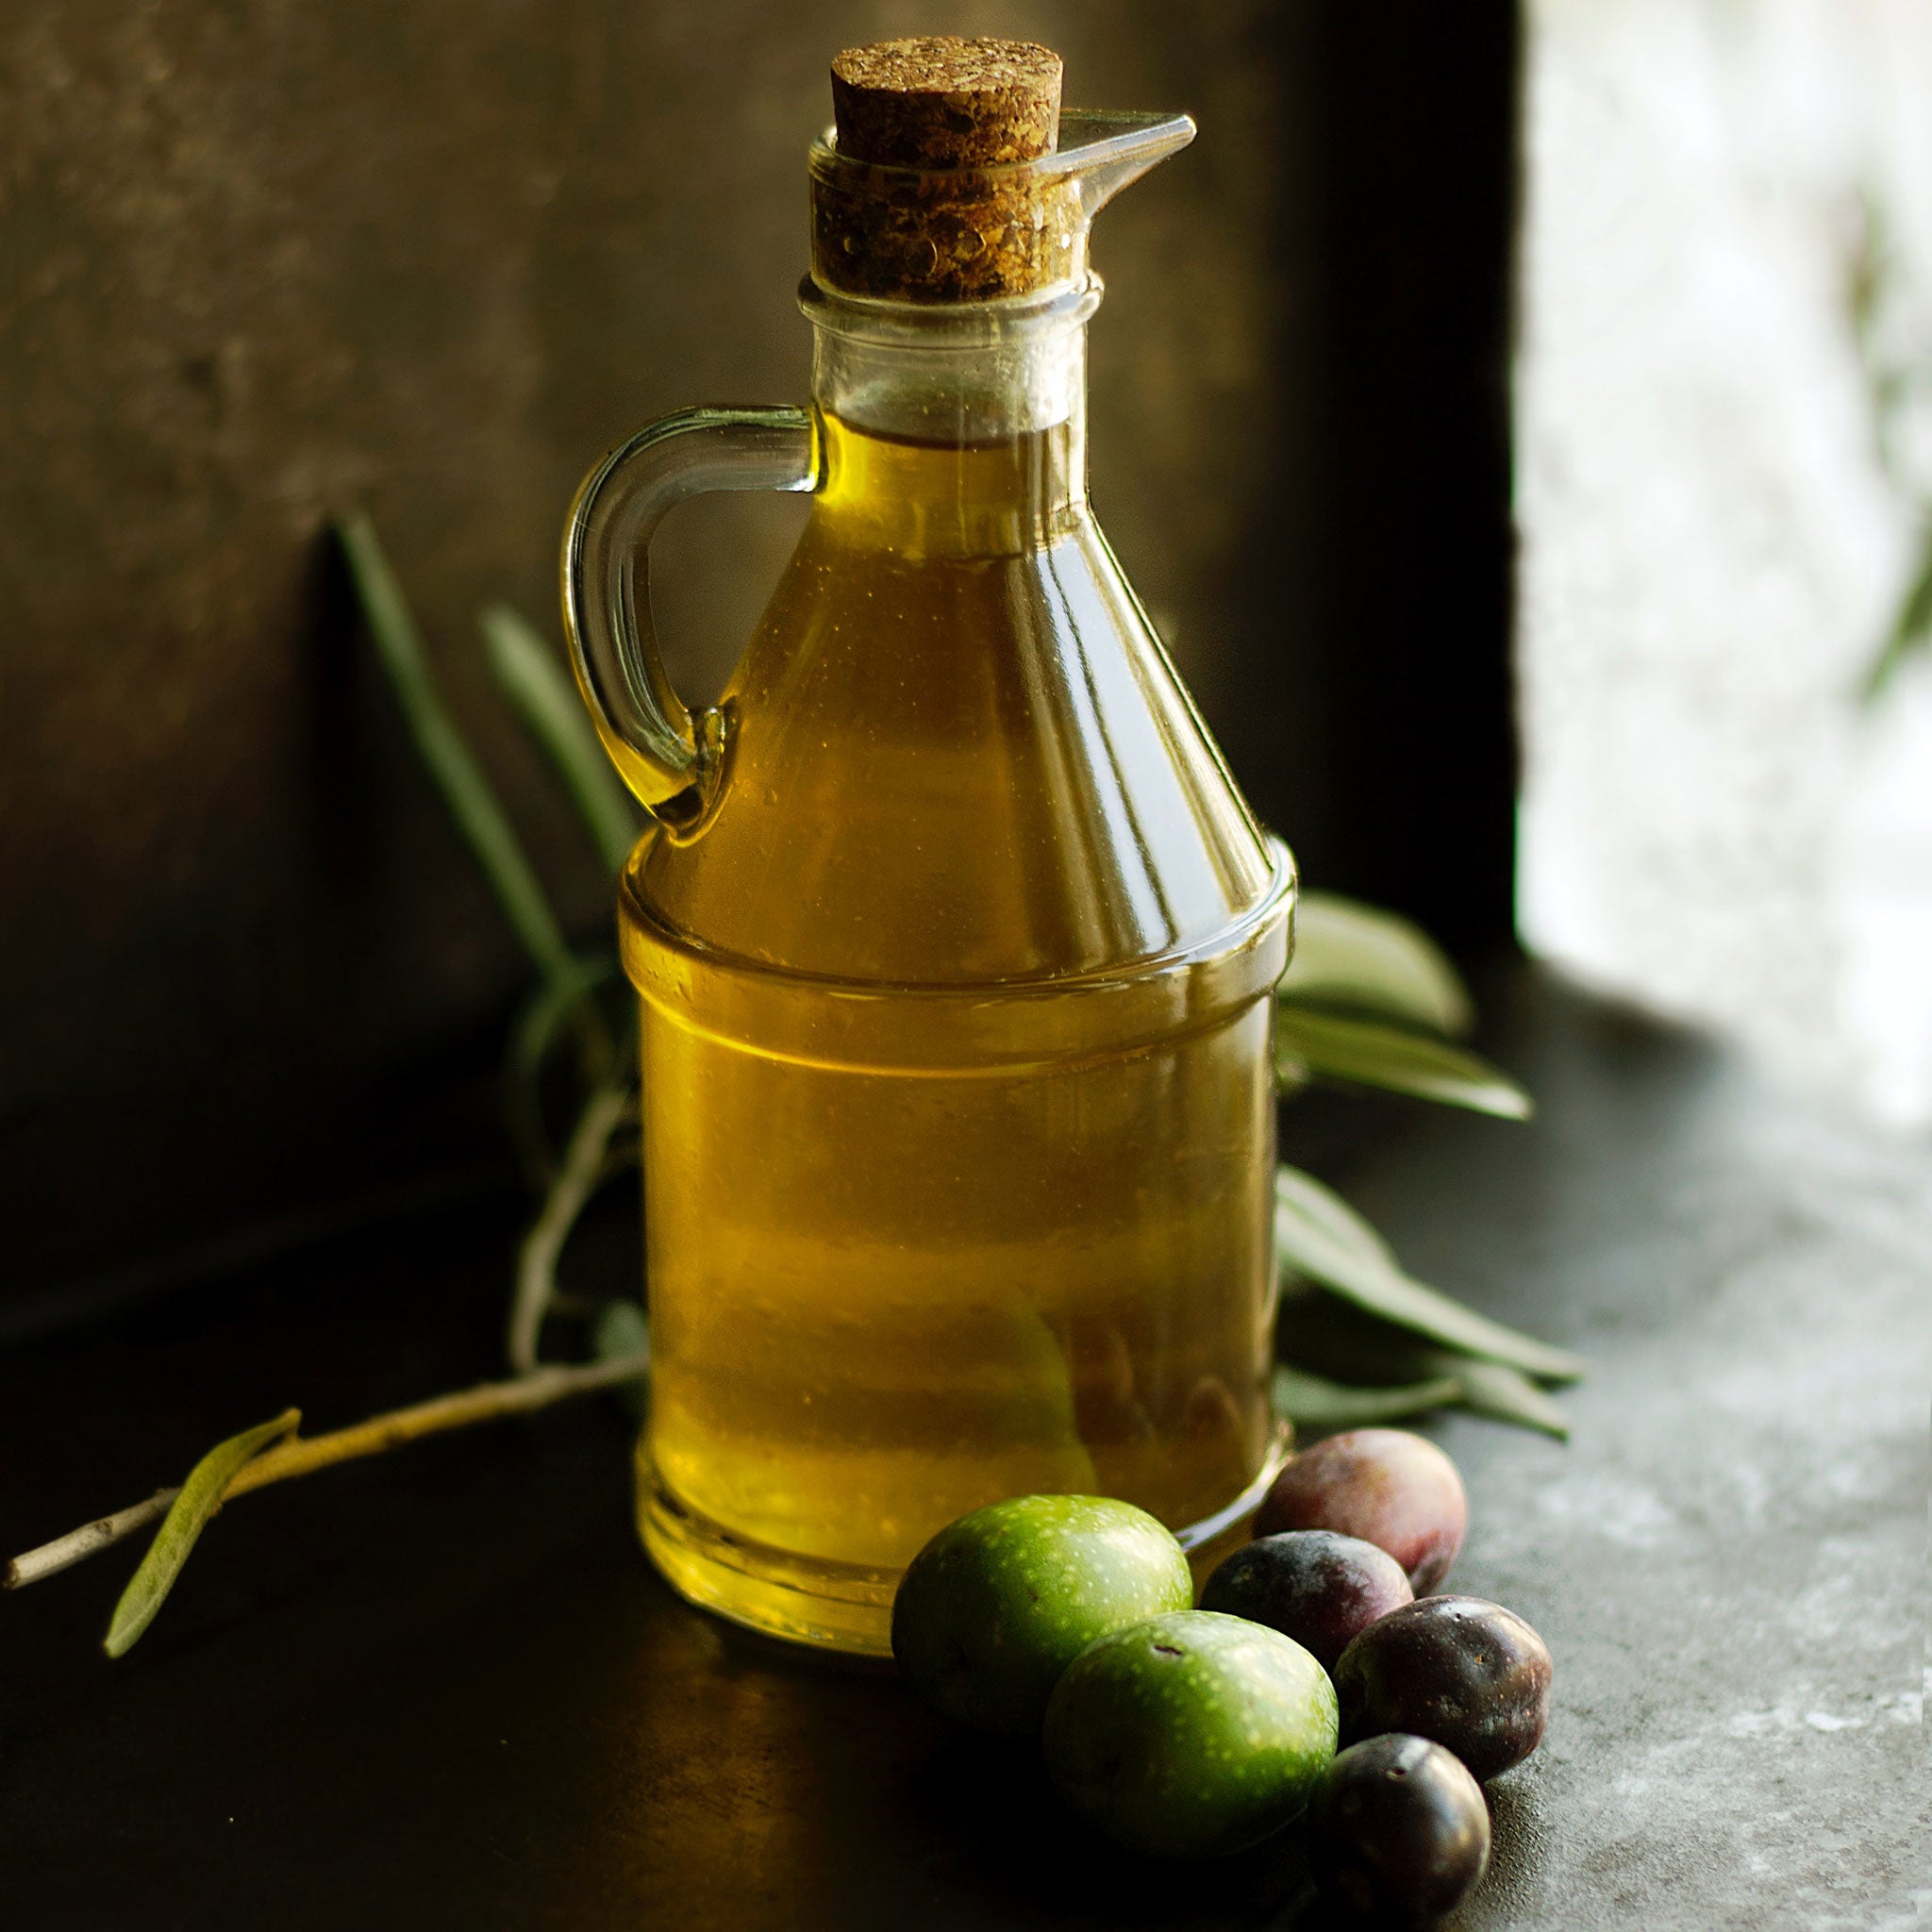 Kalamata Extra Virgin Olive Oil from Greece